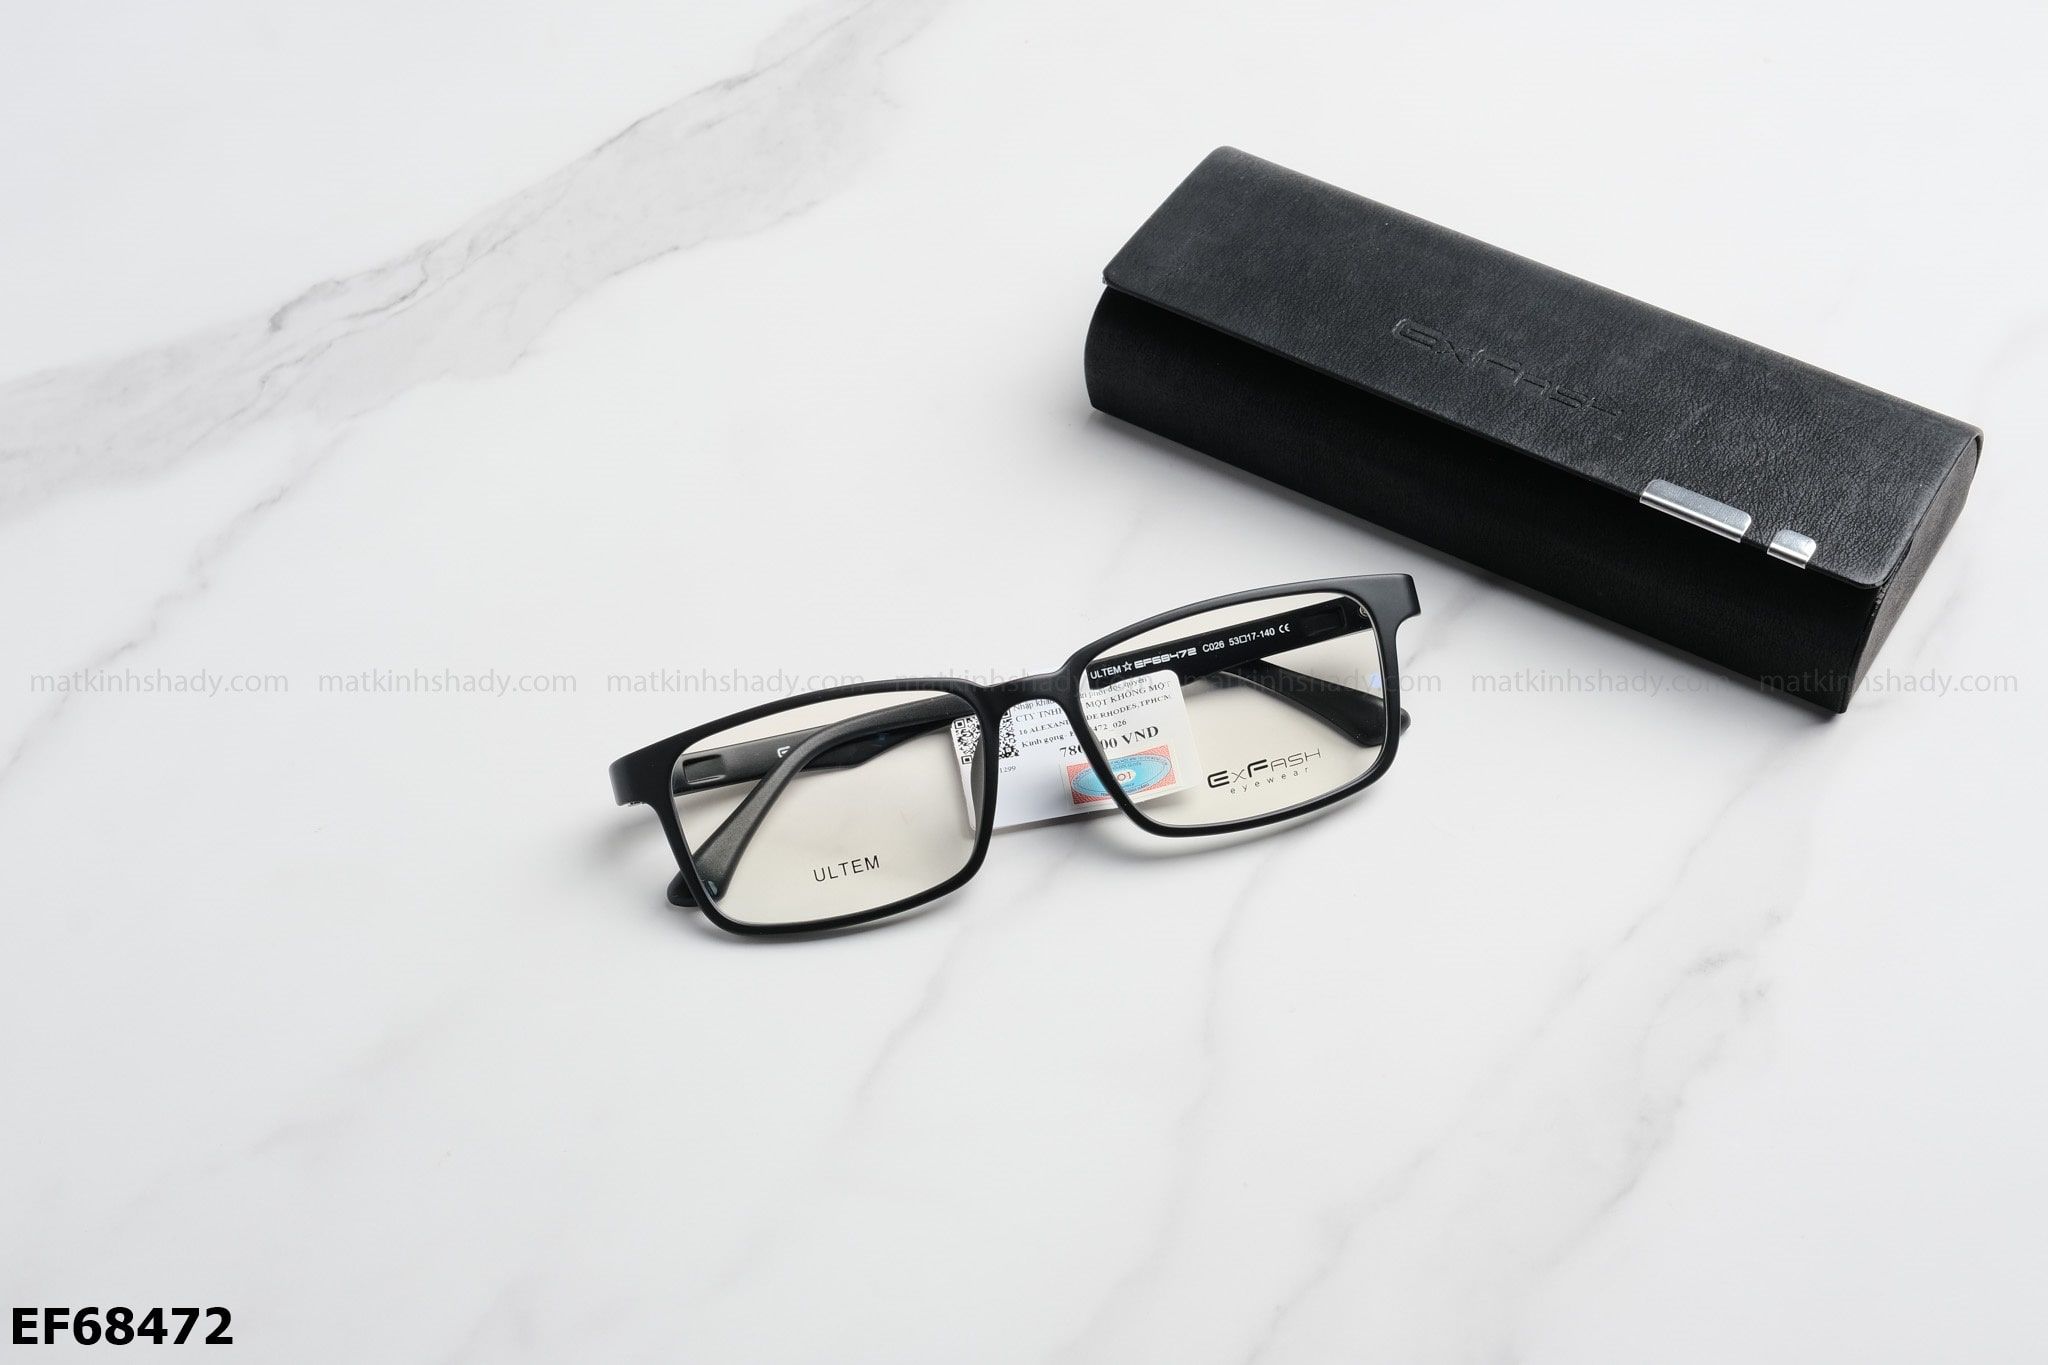  Exfash Eyewear - Glasses - EF68472 